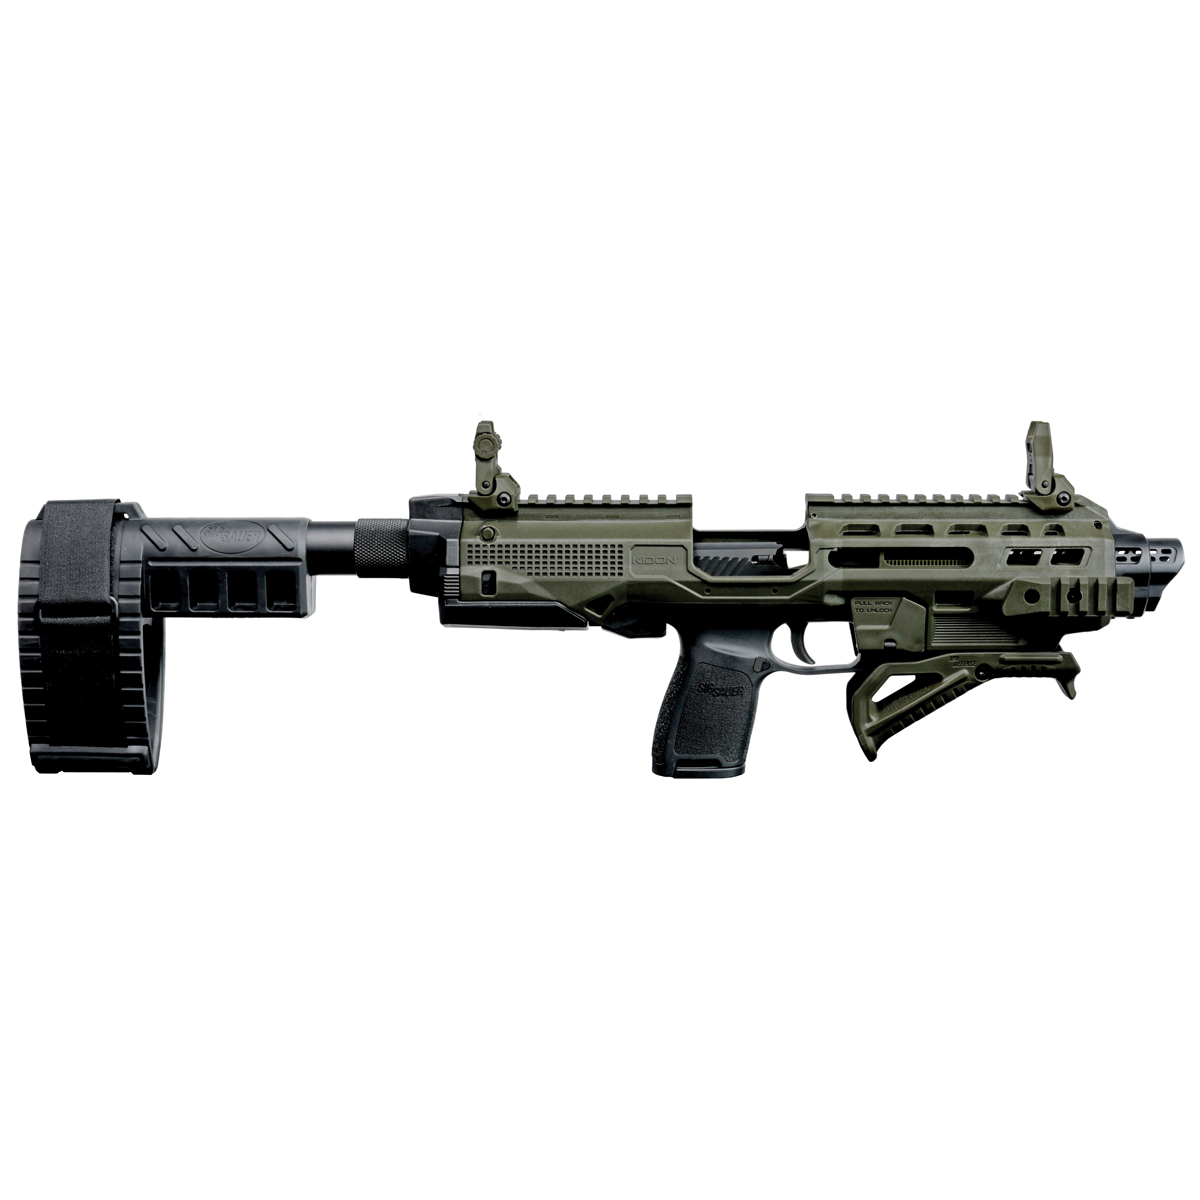 Tested: Beretta 92 .22 Long Rifle Conversion Kit